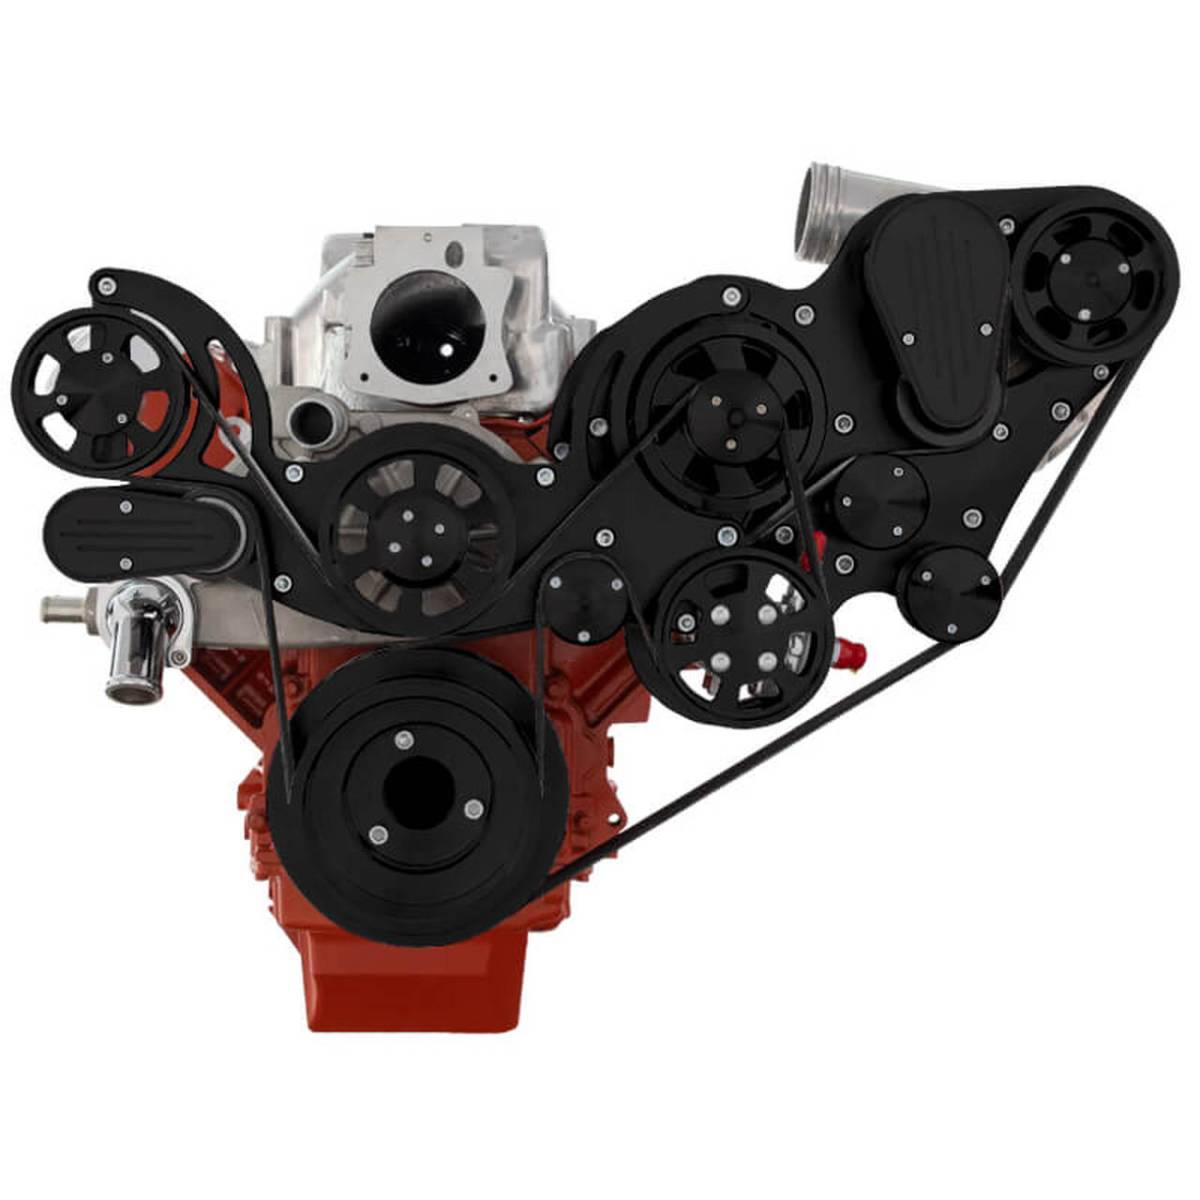 CVF Racing - CVF Wraptor Chevy LS Engine Procharger Serpentine Bracket System with AC & Alternator - Black - Image 1